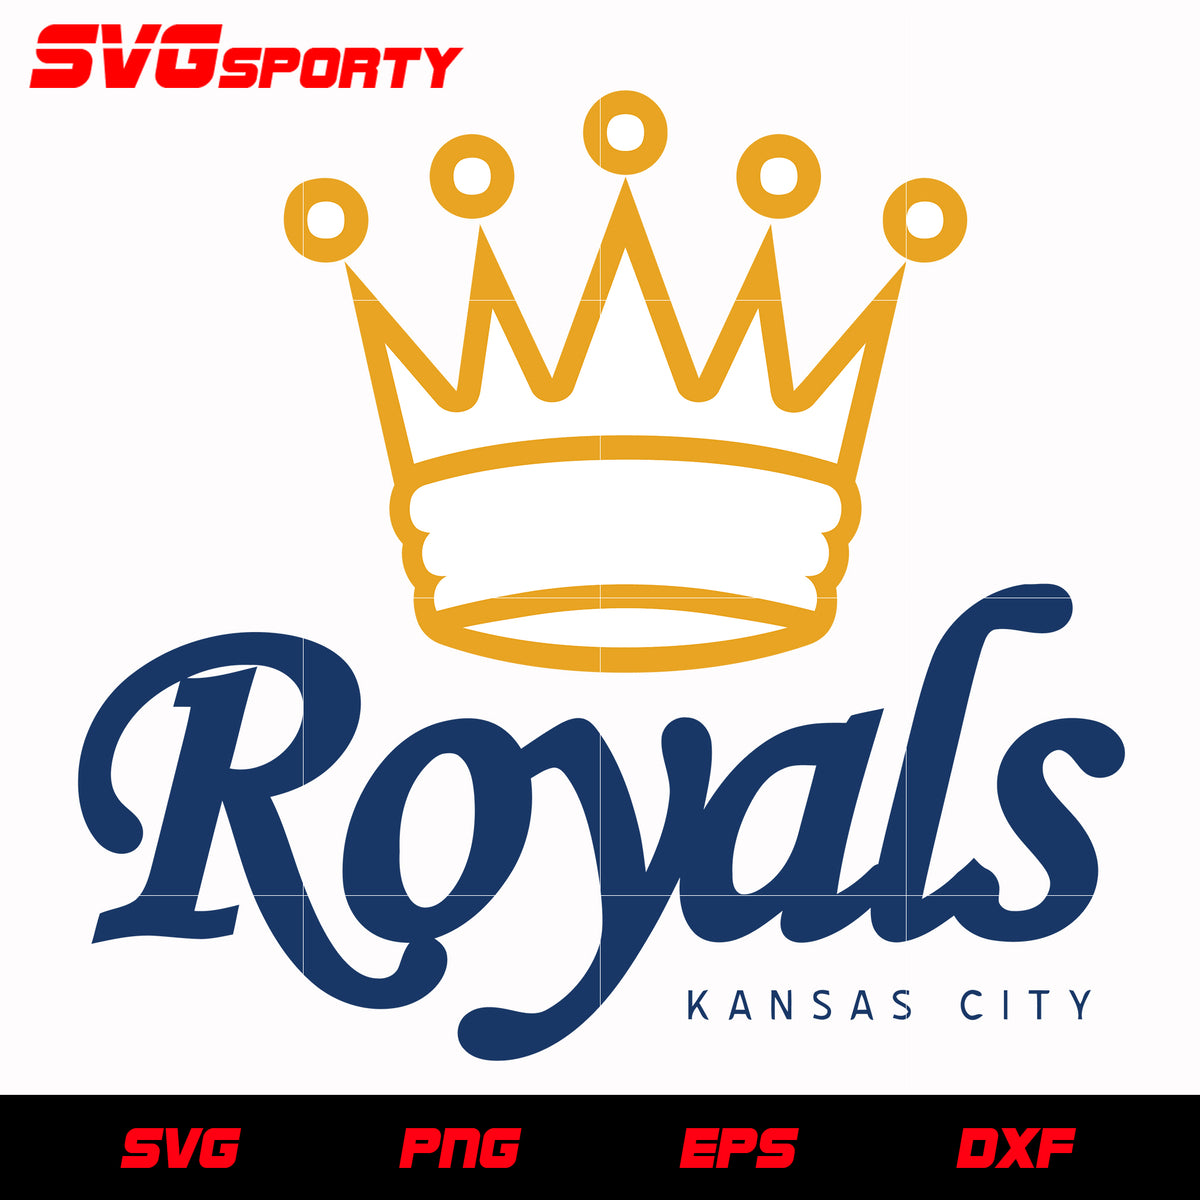 Crown R - Kansas City Royals T-Shirt